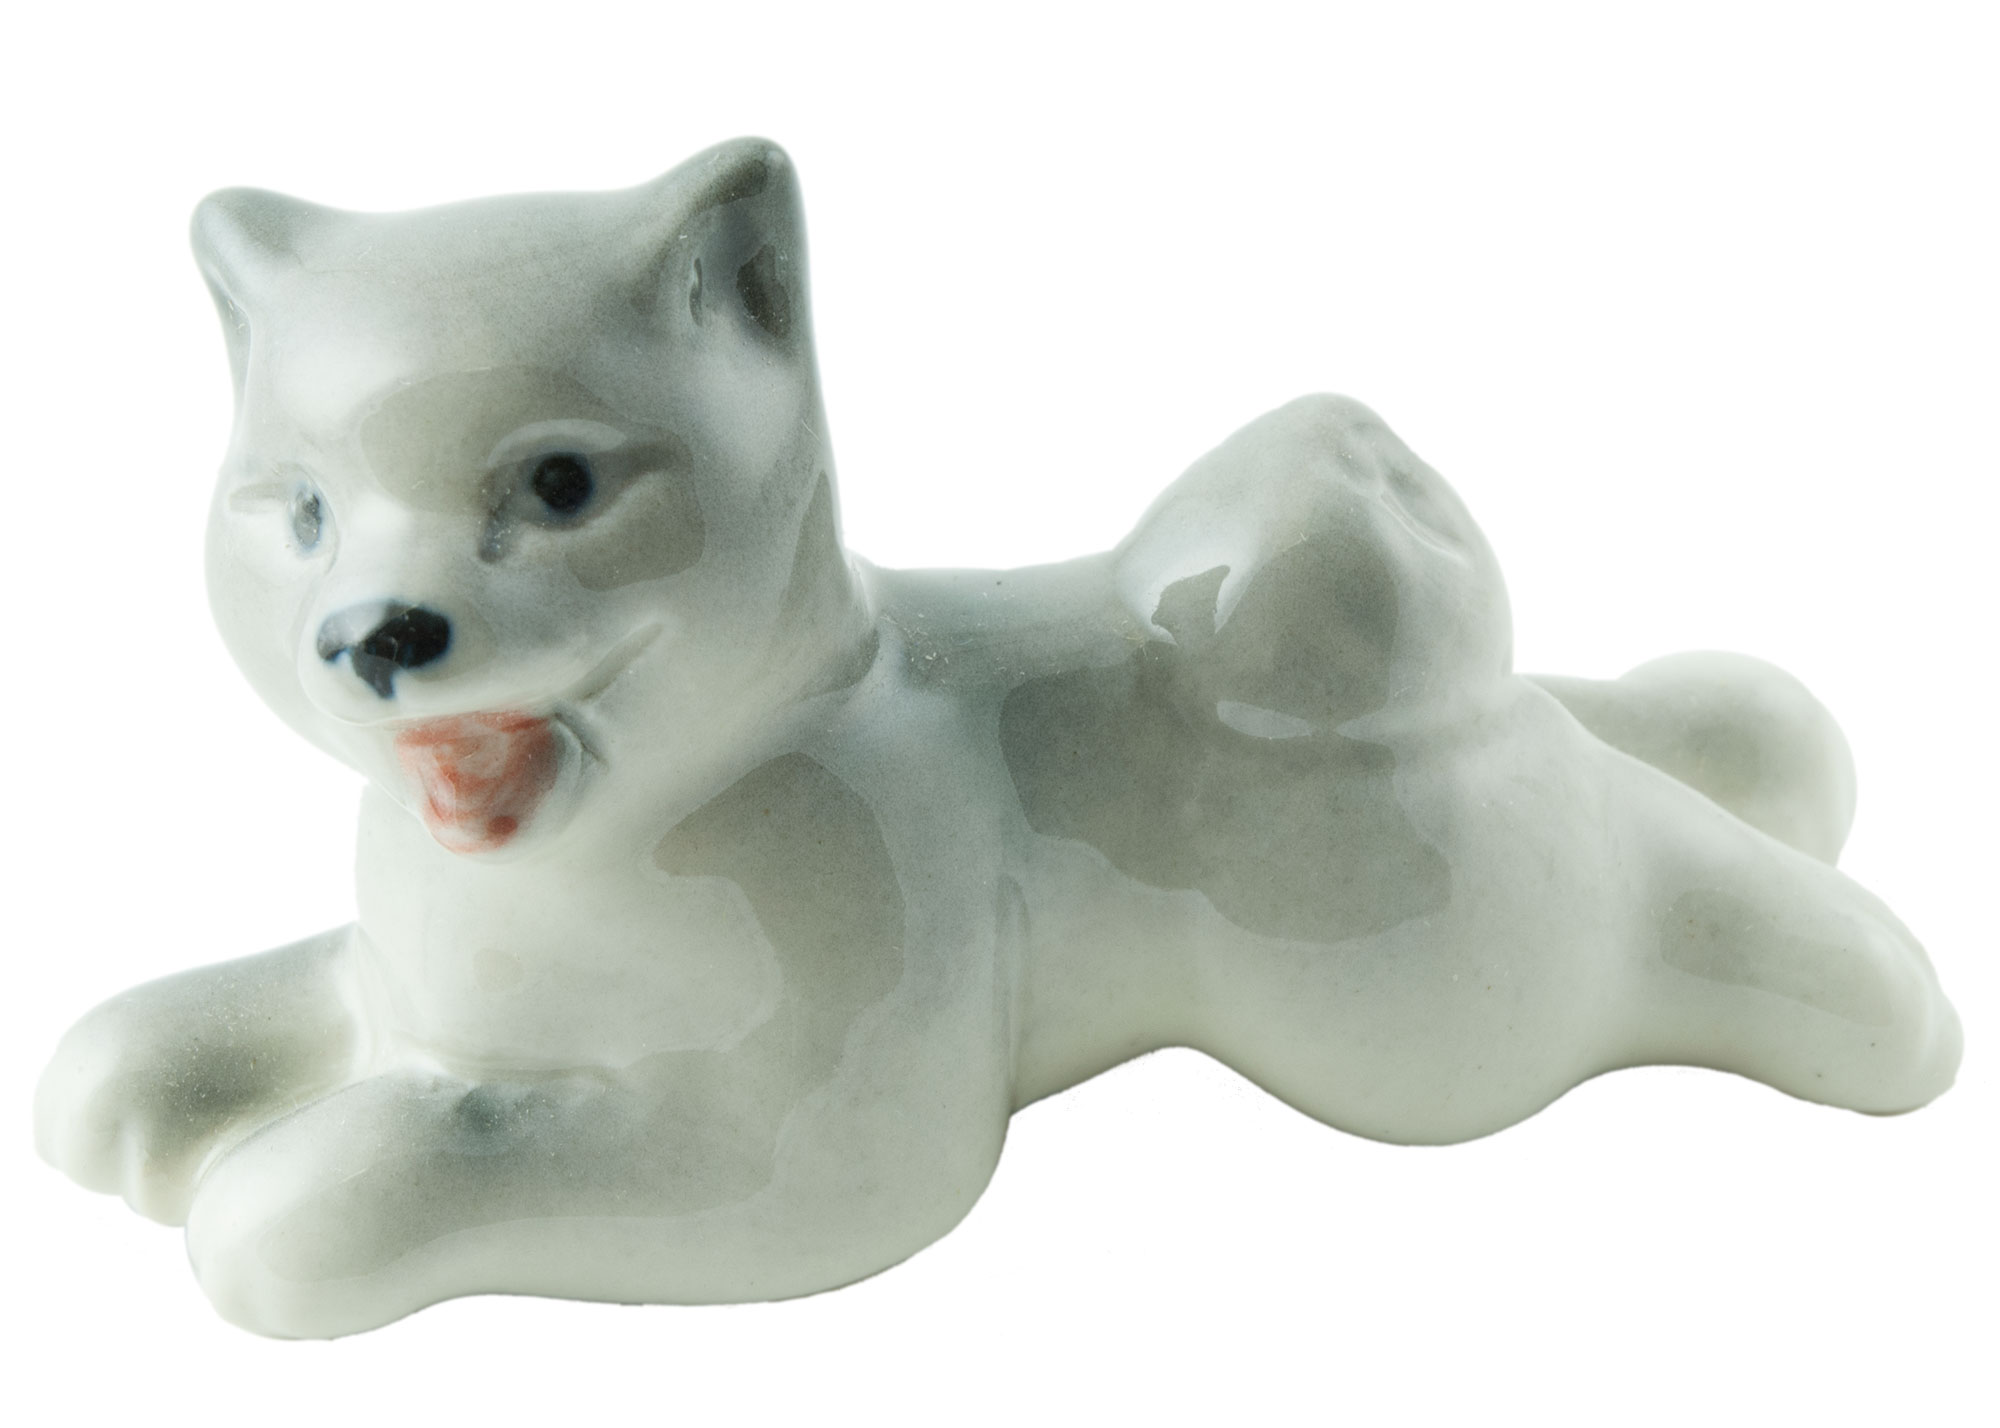 Buy Husky Porcelain Figurine at GoldenCockerel.com